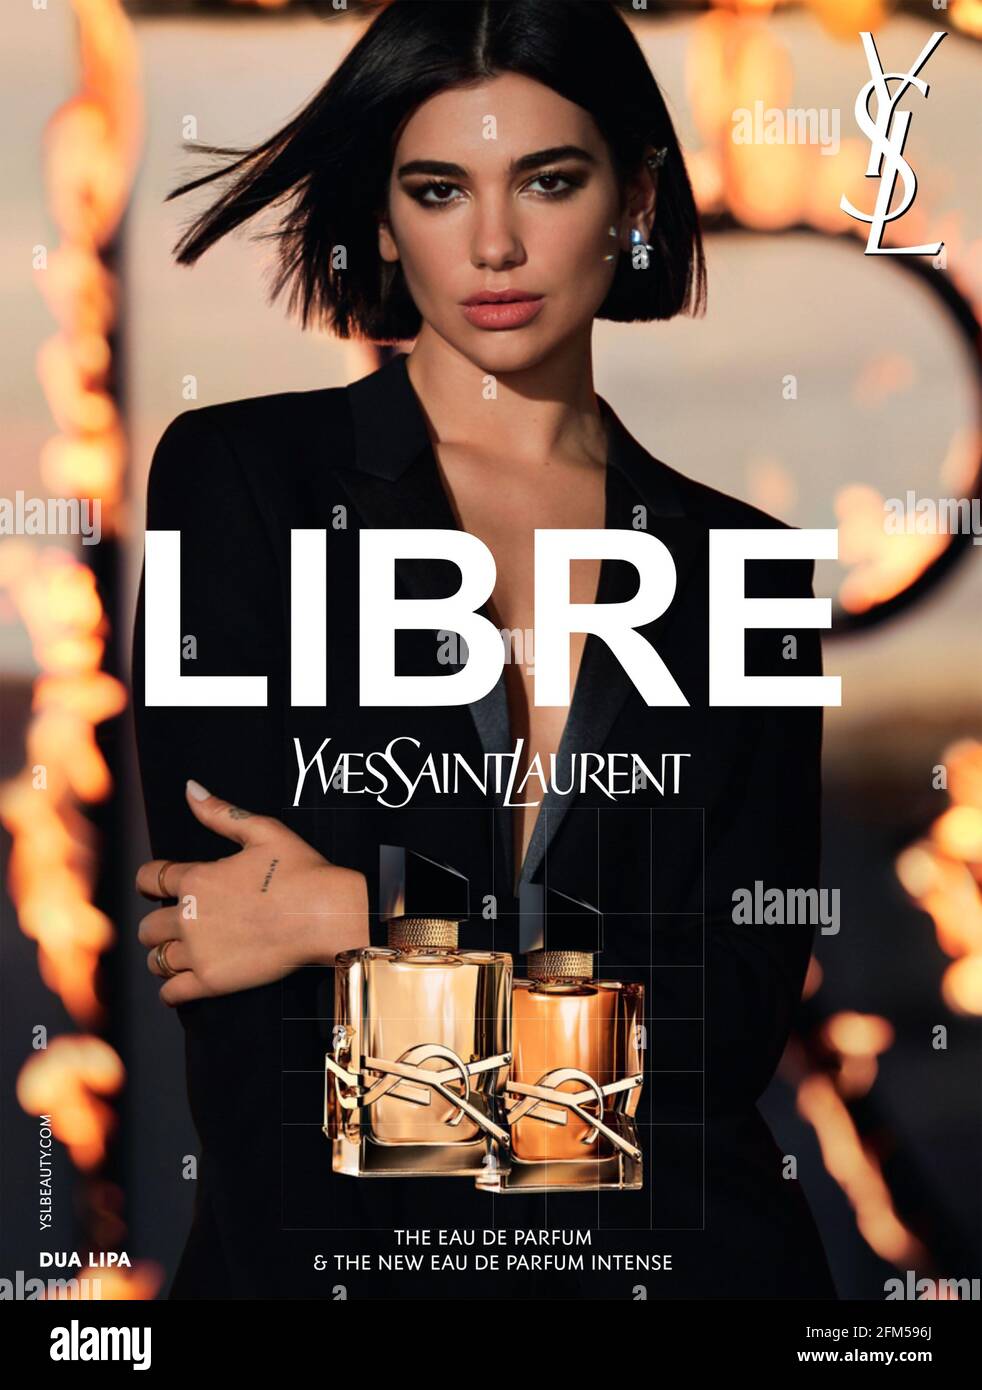 2020s UK Yves Saint Laurent Magazine Advert Stock Photo - Alamy